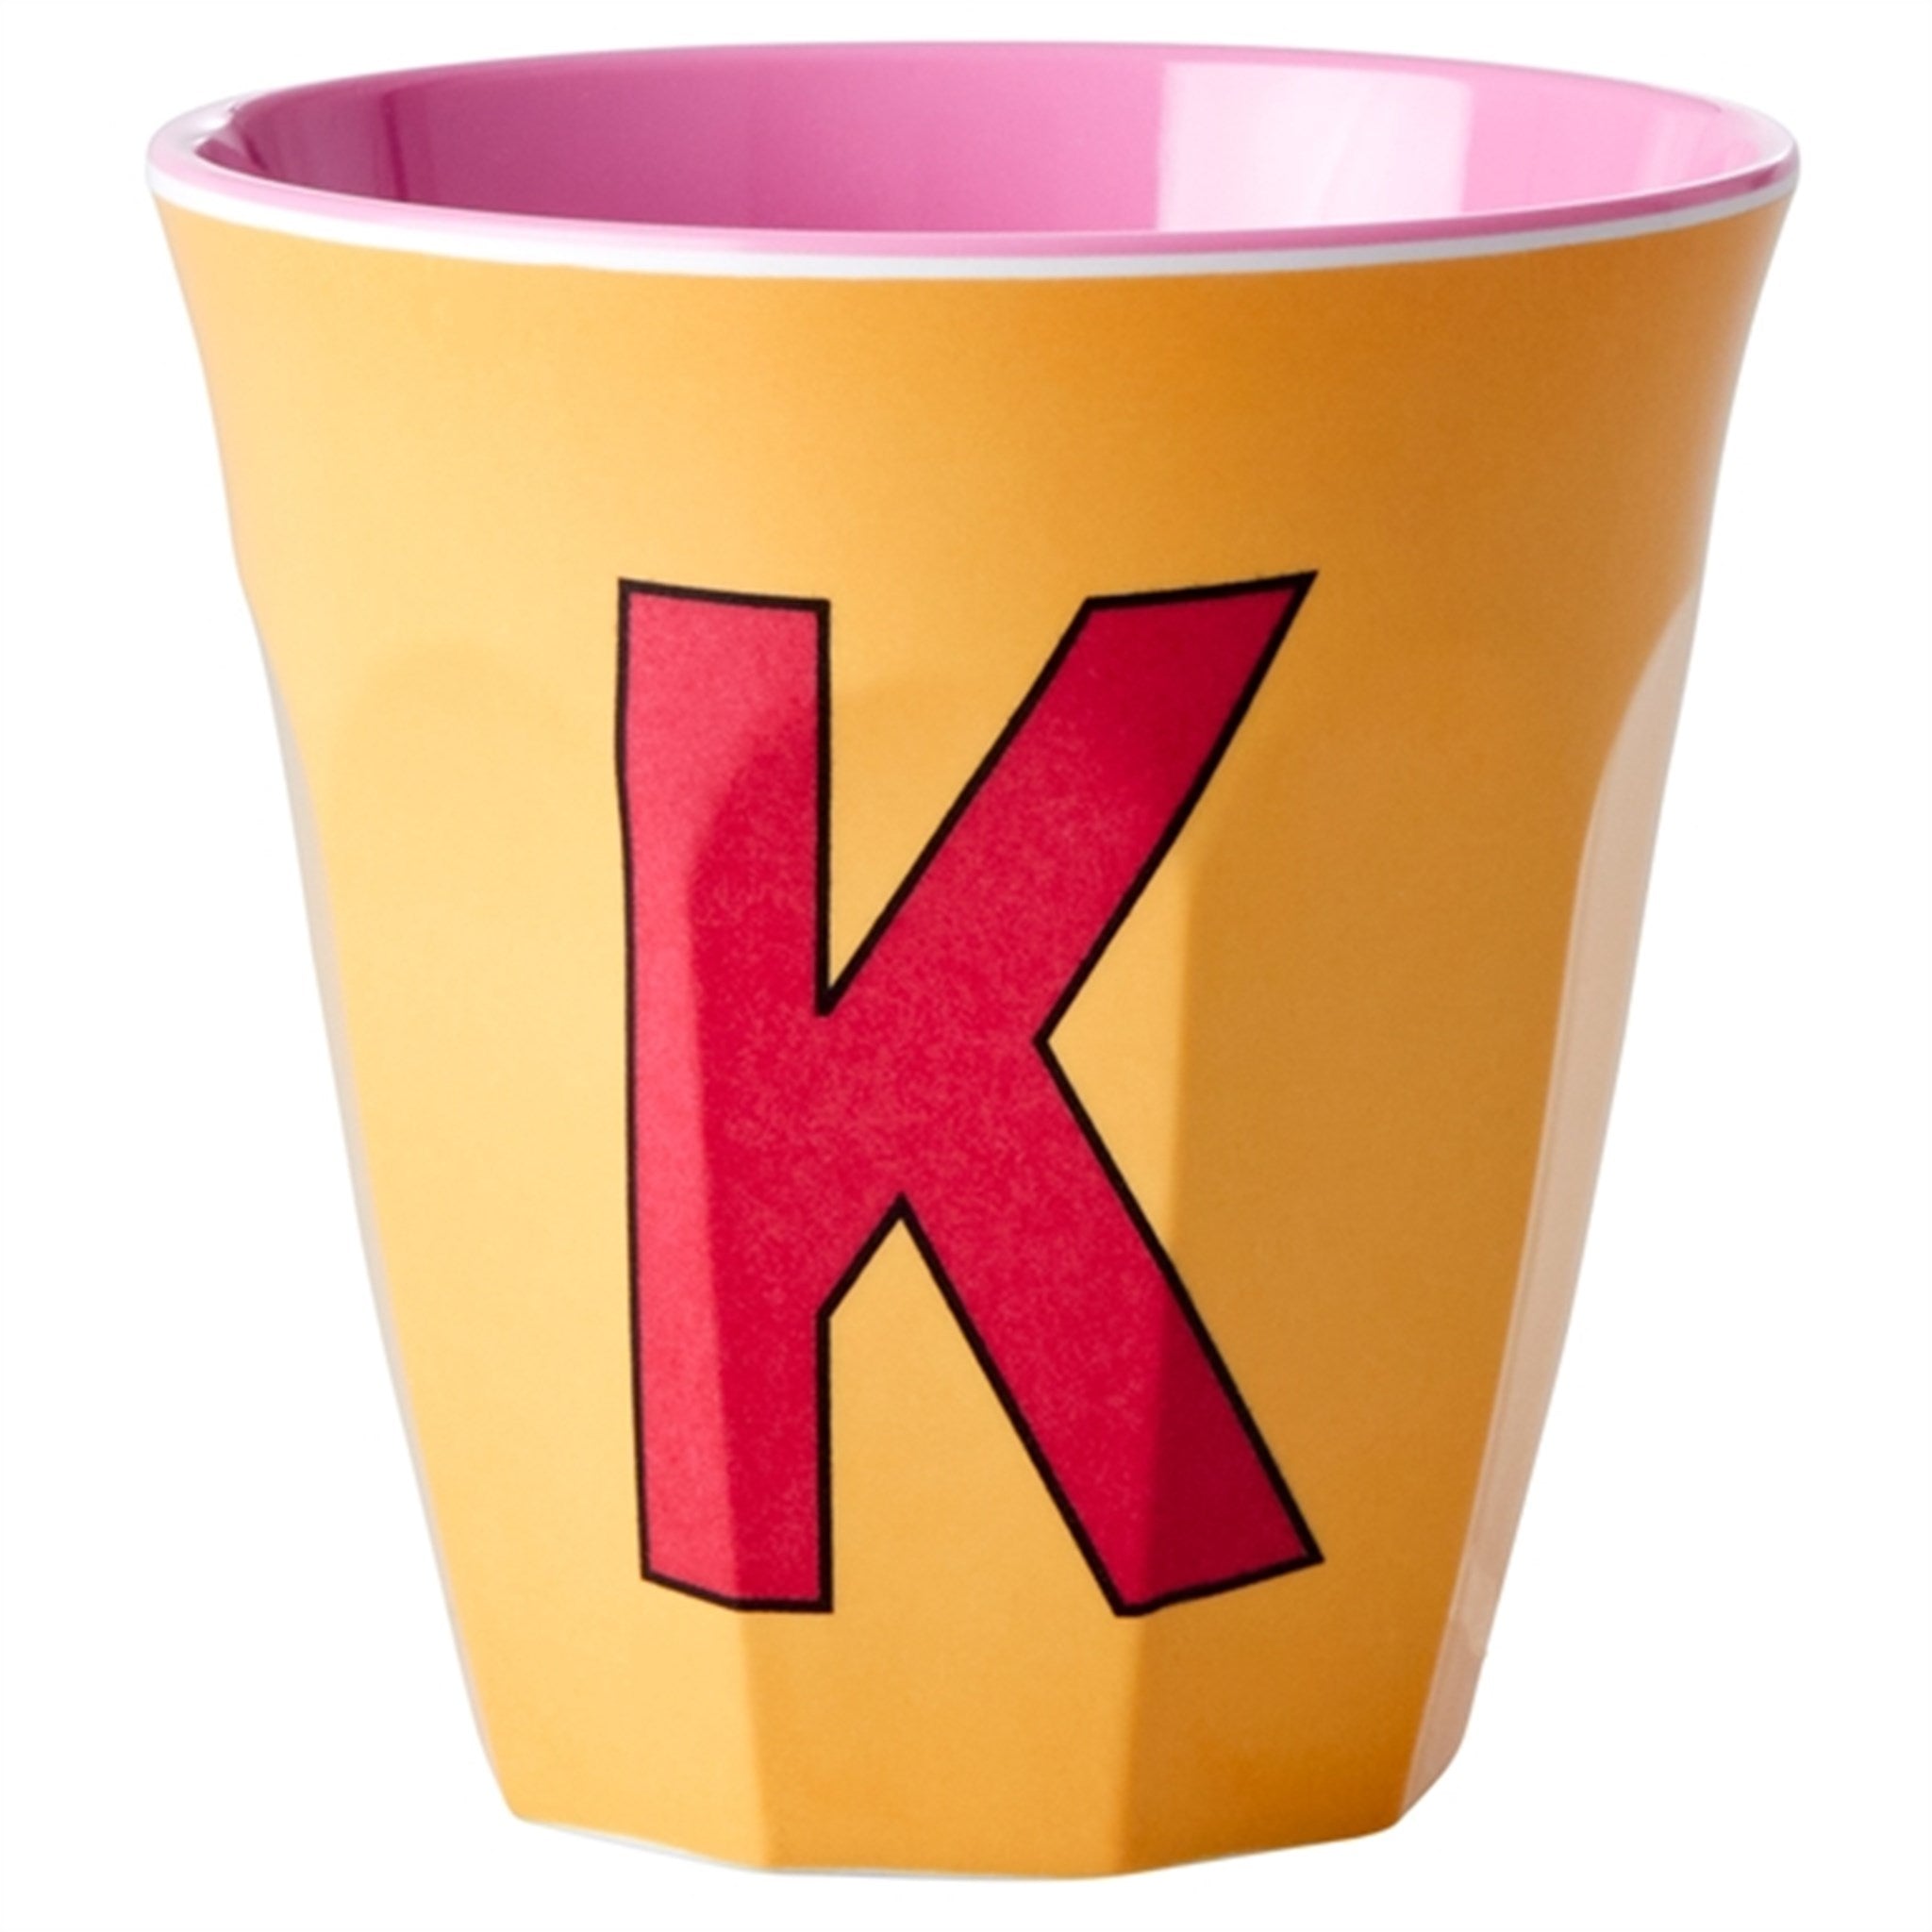 RICE Pinkish Colors Melamine Alphabet Cup 7